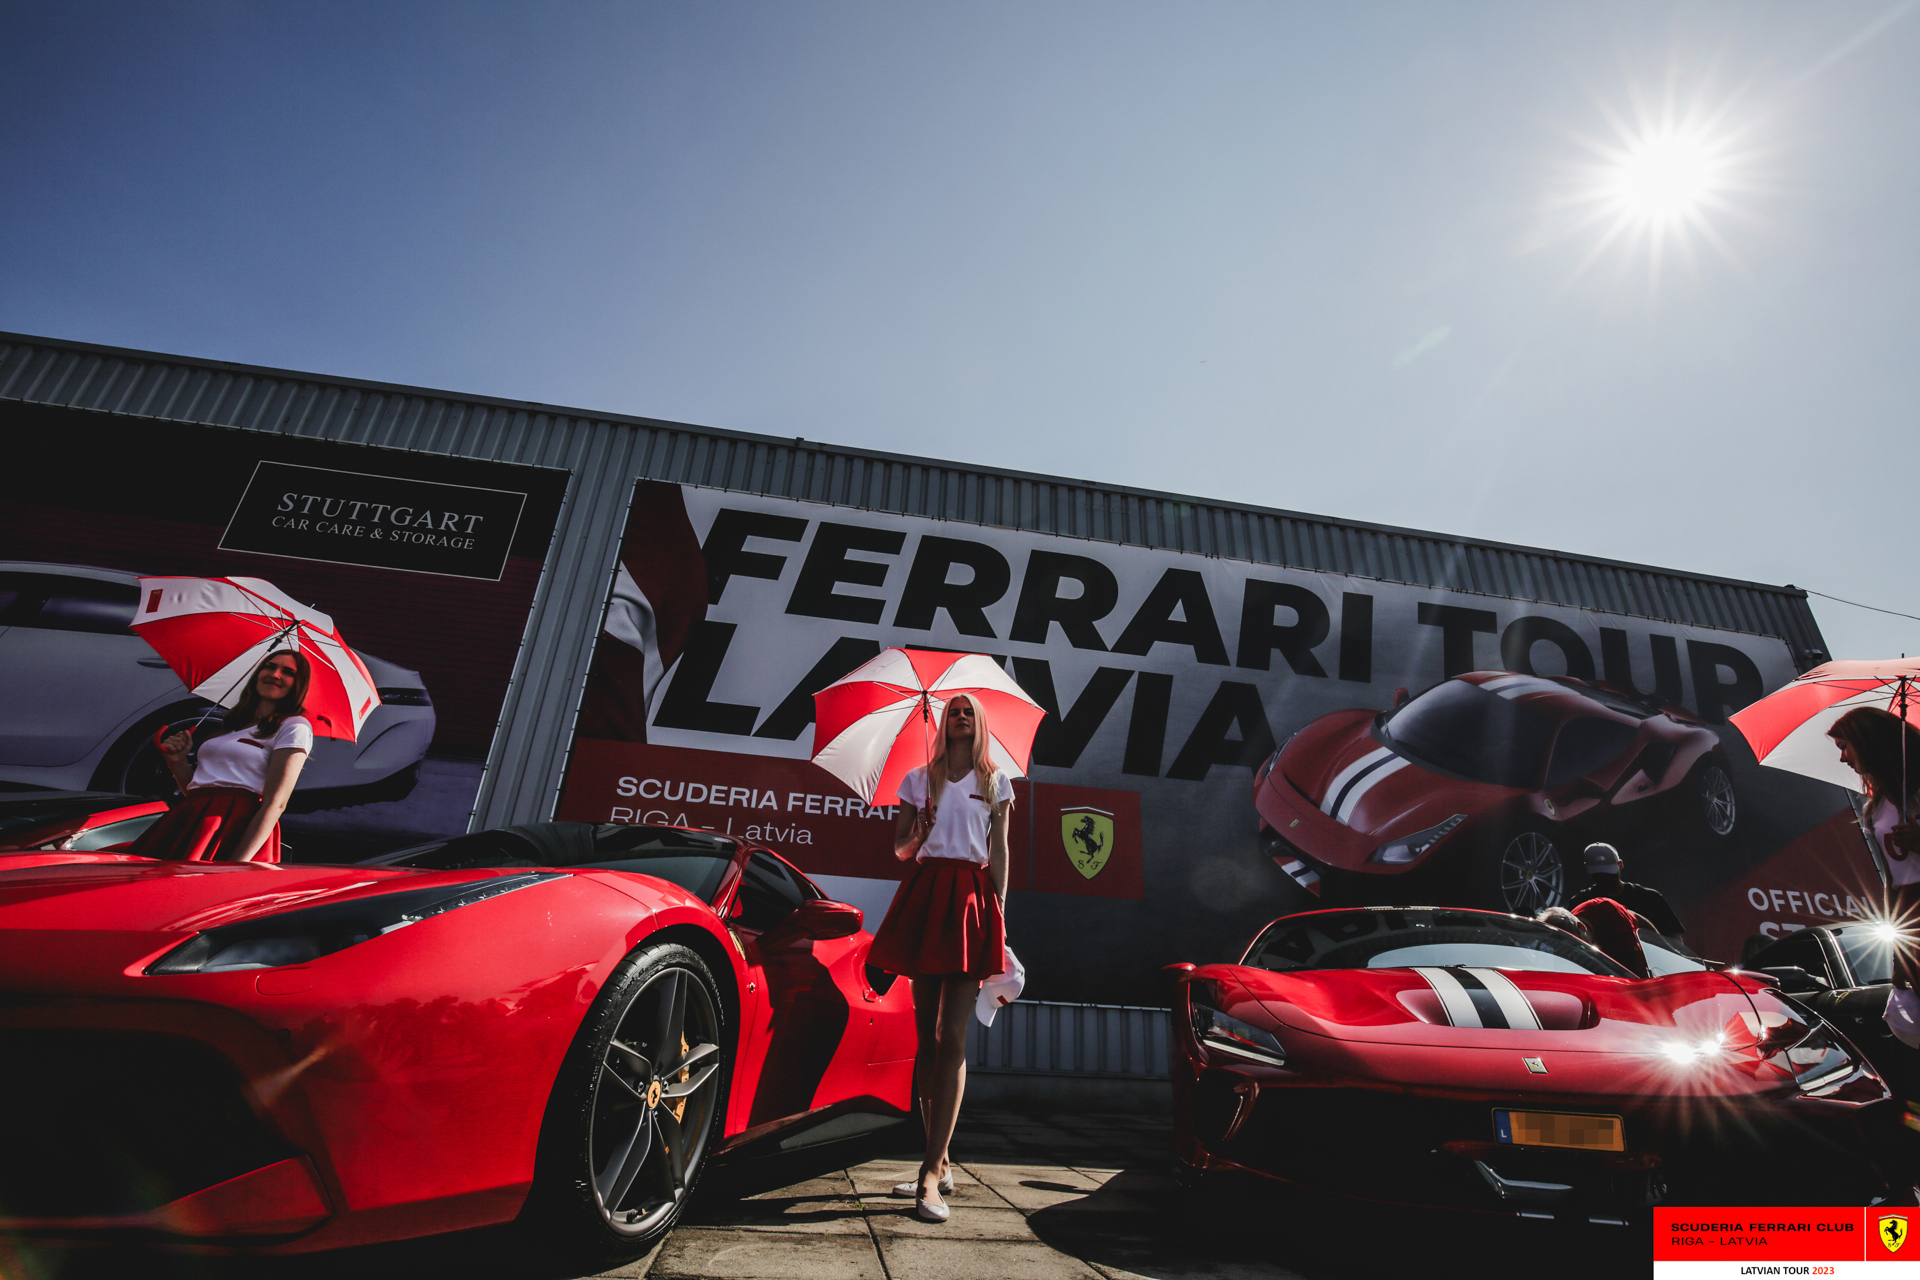 Grid girls and Ferraris.